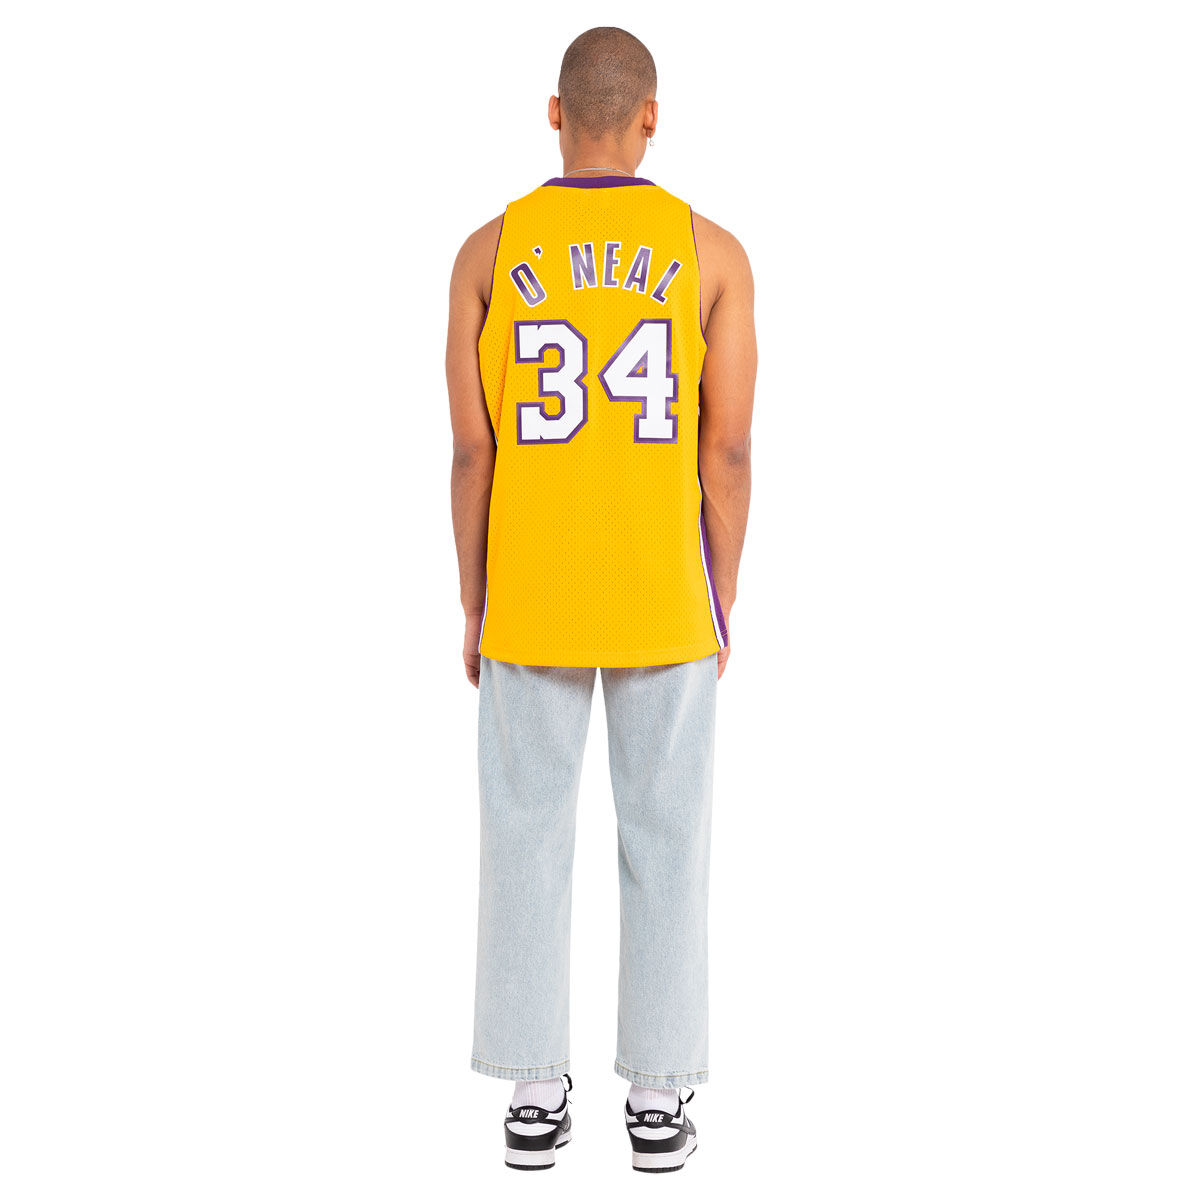 Shaq O'Neal 09-10 Cavaliers Home Swingman jersey